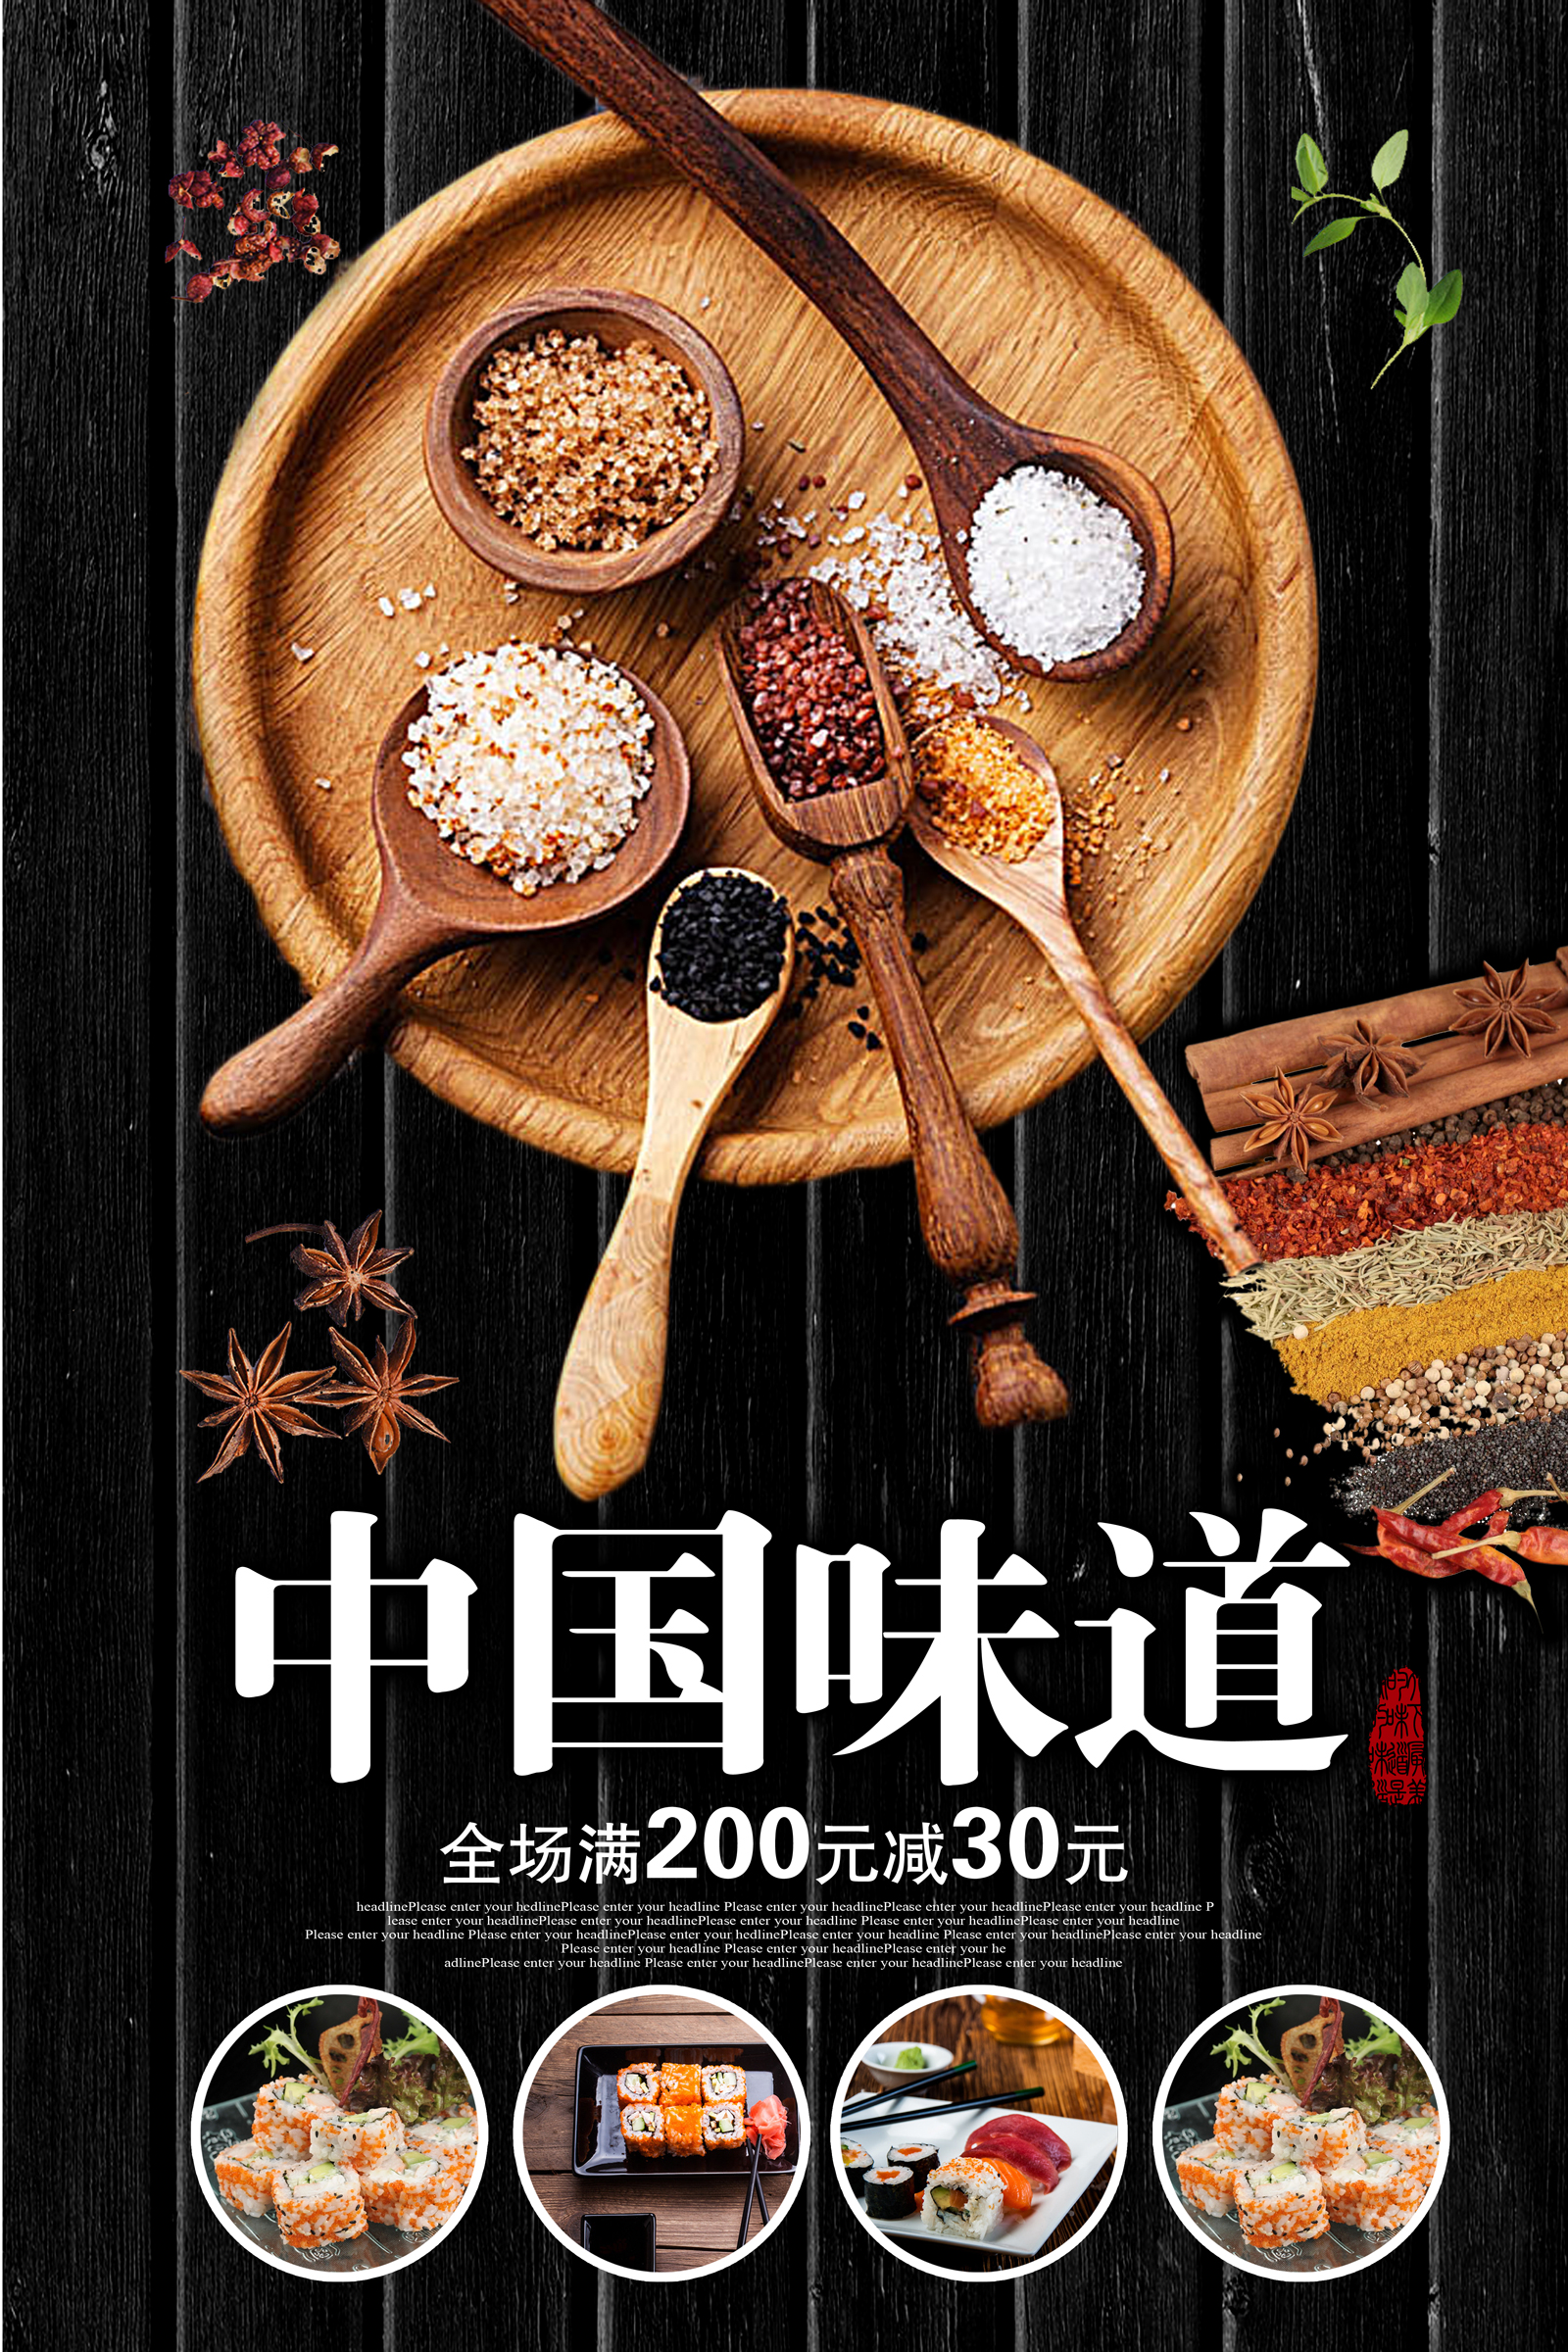 China flavor restaurant advertising design - PSD File Free Download